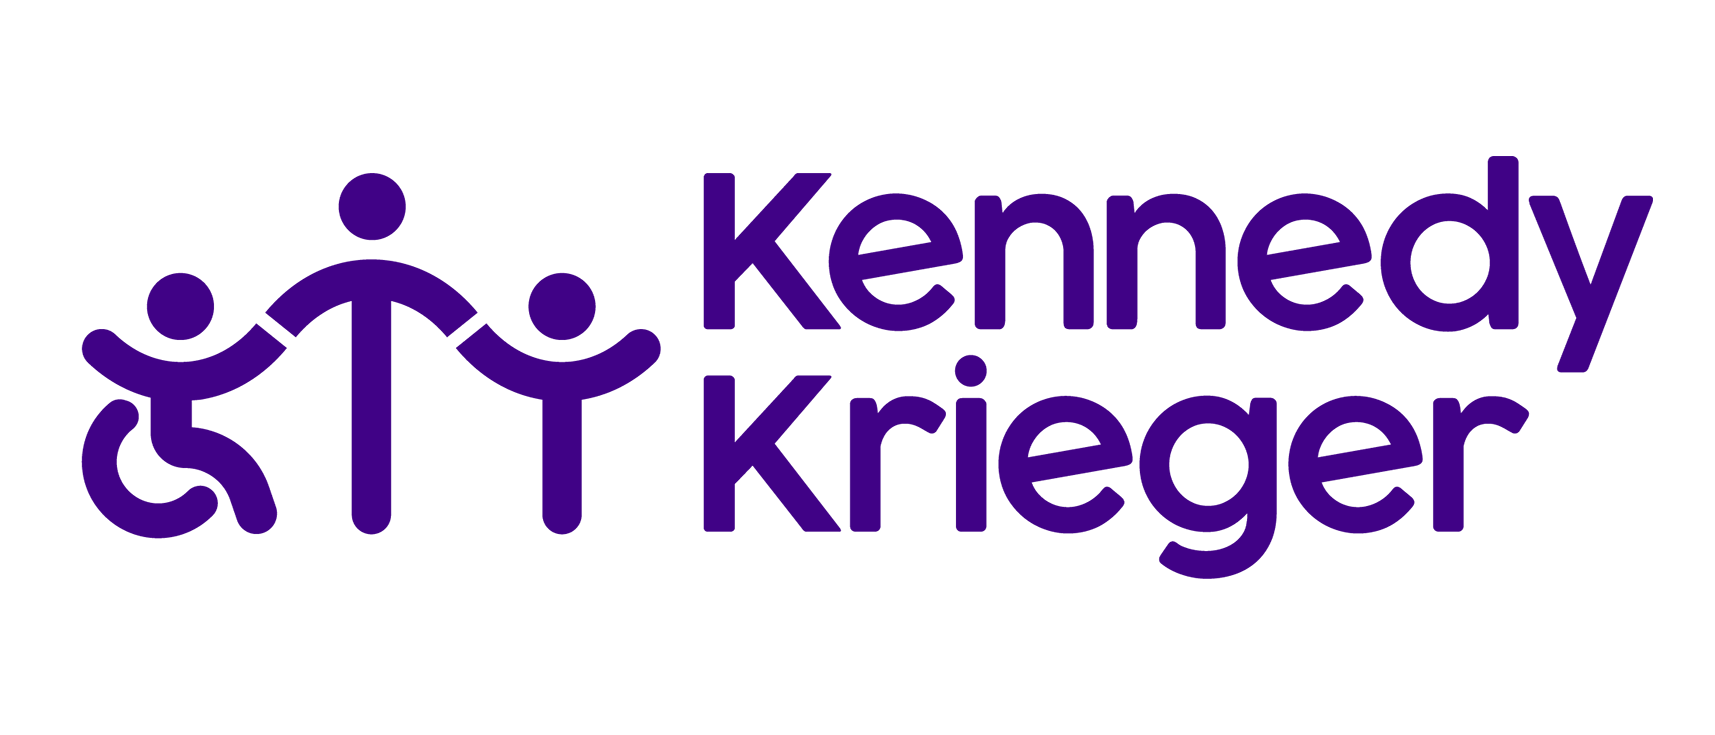 Kennedy Krieger Institute logo